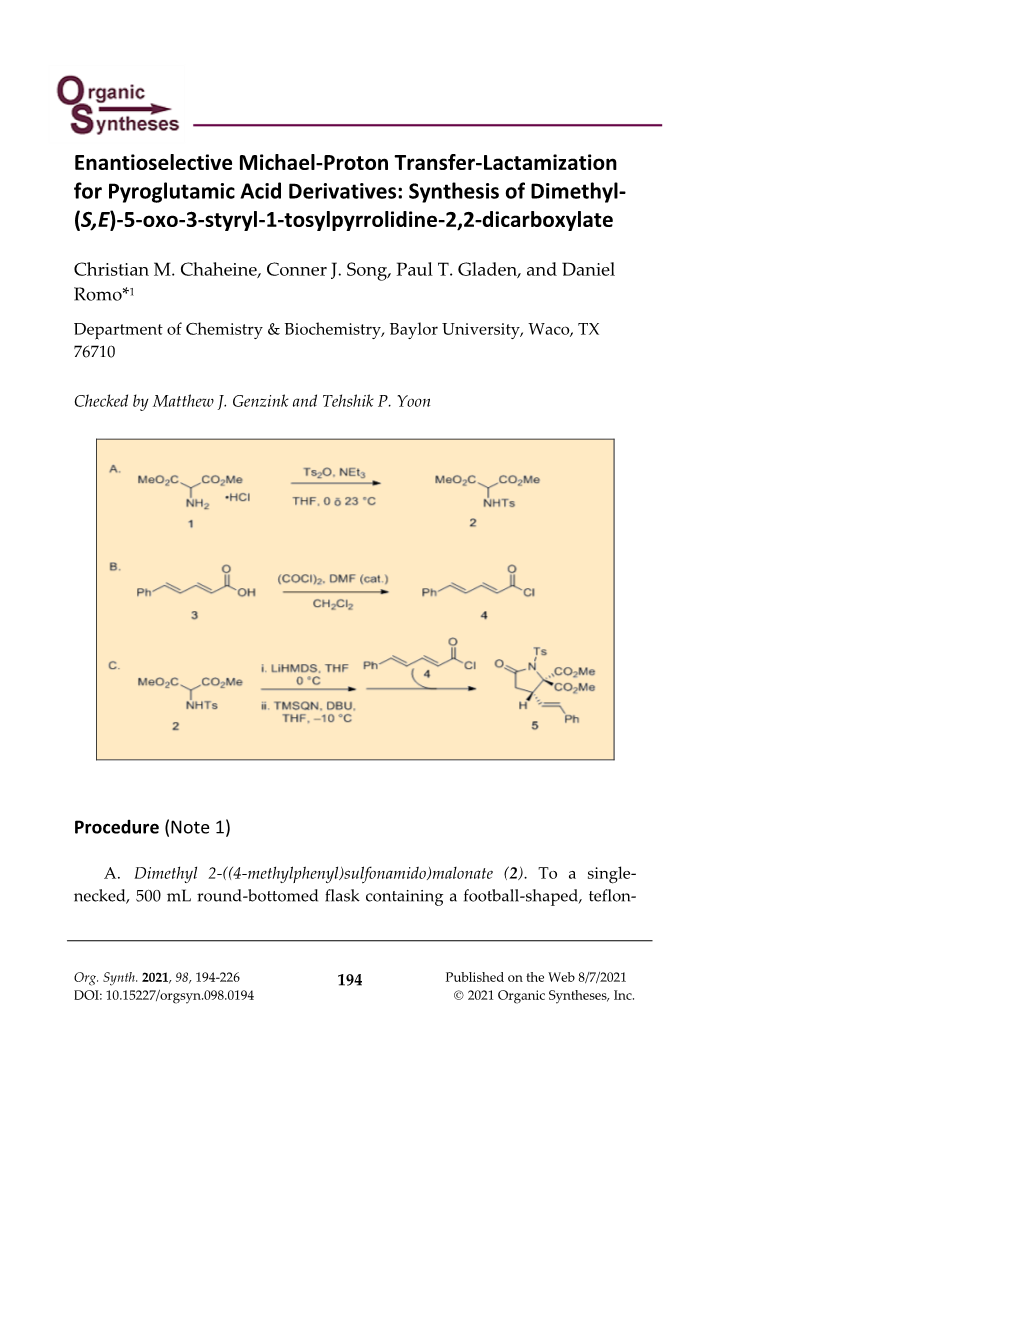 Enantioselective Michael-Proton Transfer-Lactamization for Pyroglutamic Acid Derivatives: Synthesis of Dimethyl- (S,E)-5-Oxo-3-S